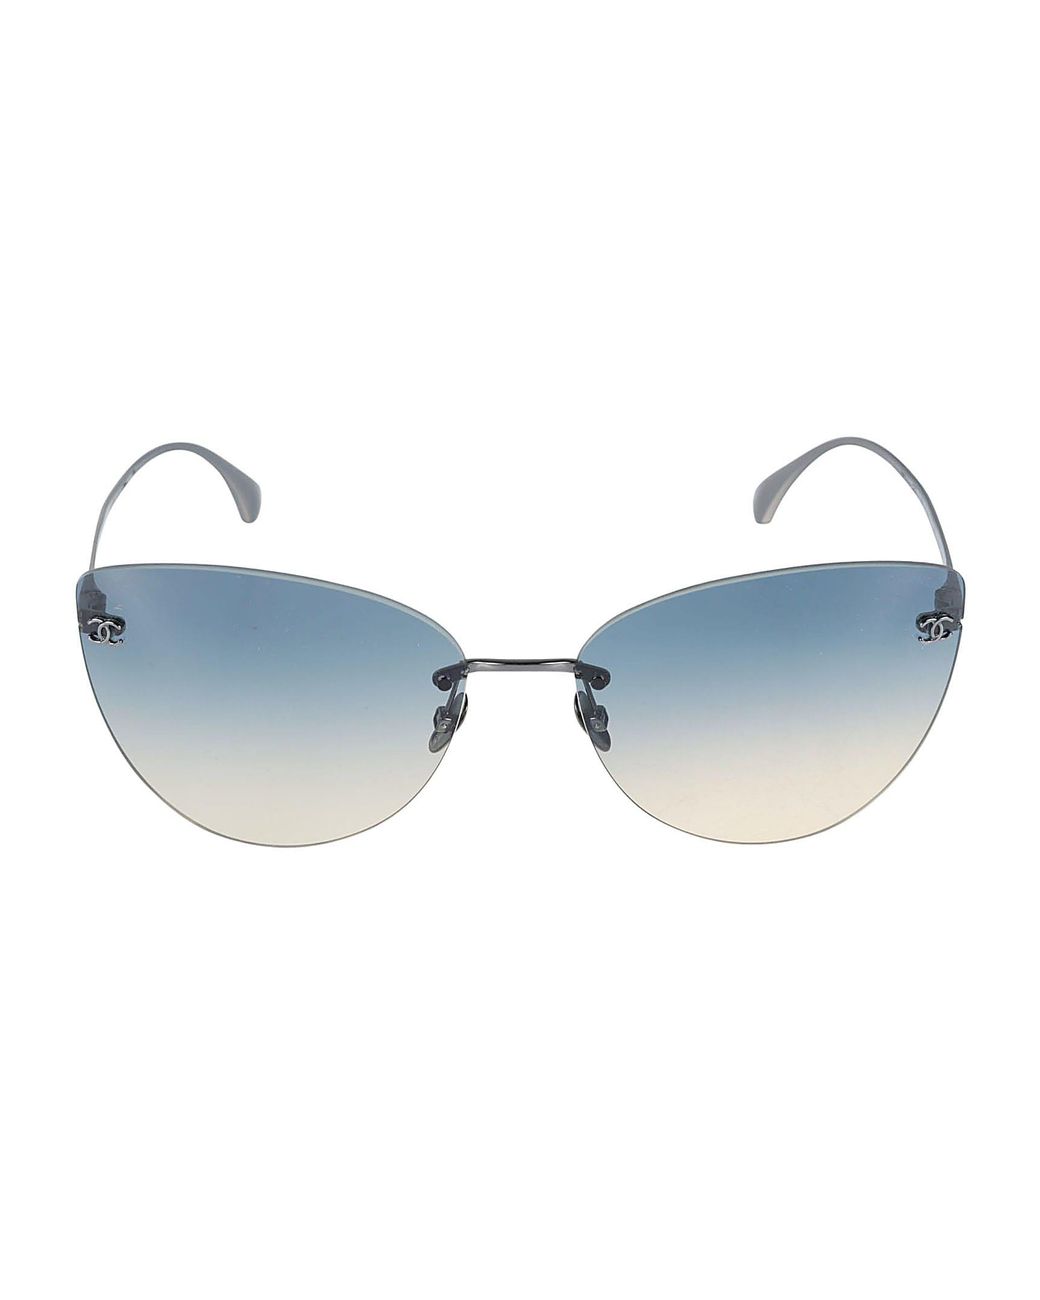 Chanel Cat-eye Rimless Sunglasses in Blue